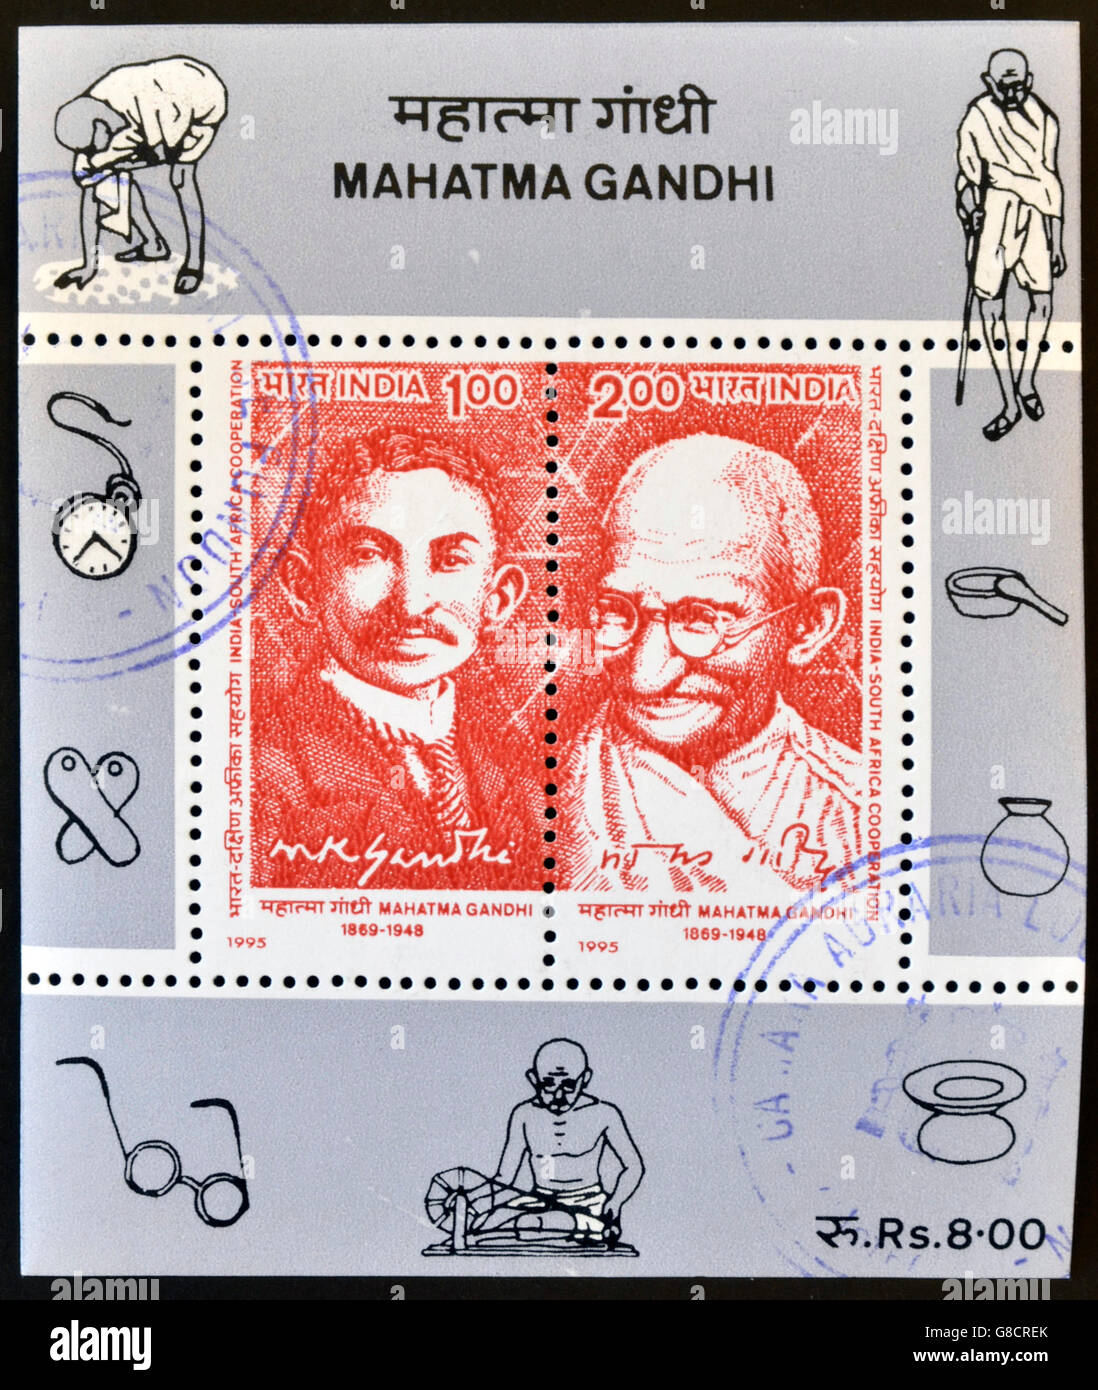 INDIA - CIRCA 1995: Stamp printed in India shows Mahatma Gandhi, circa 1995 Stock Photo